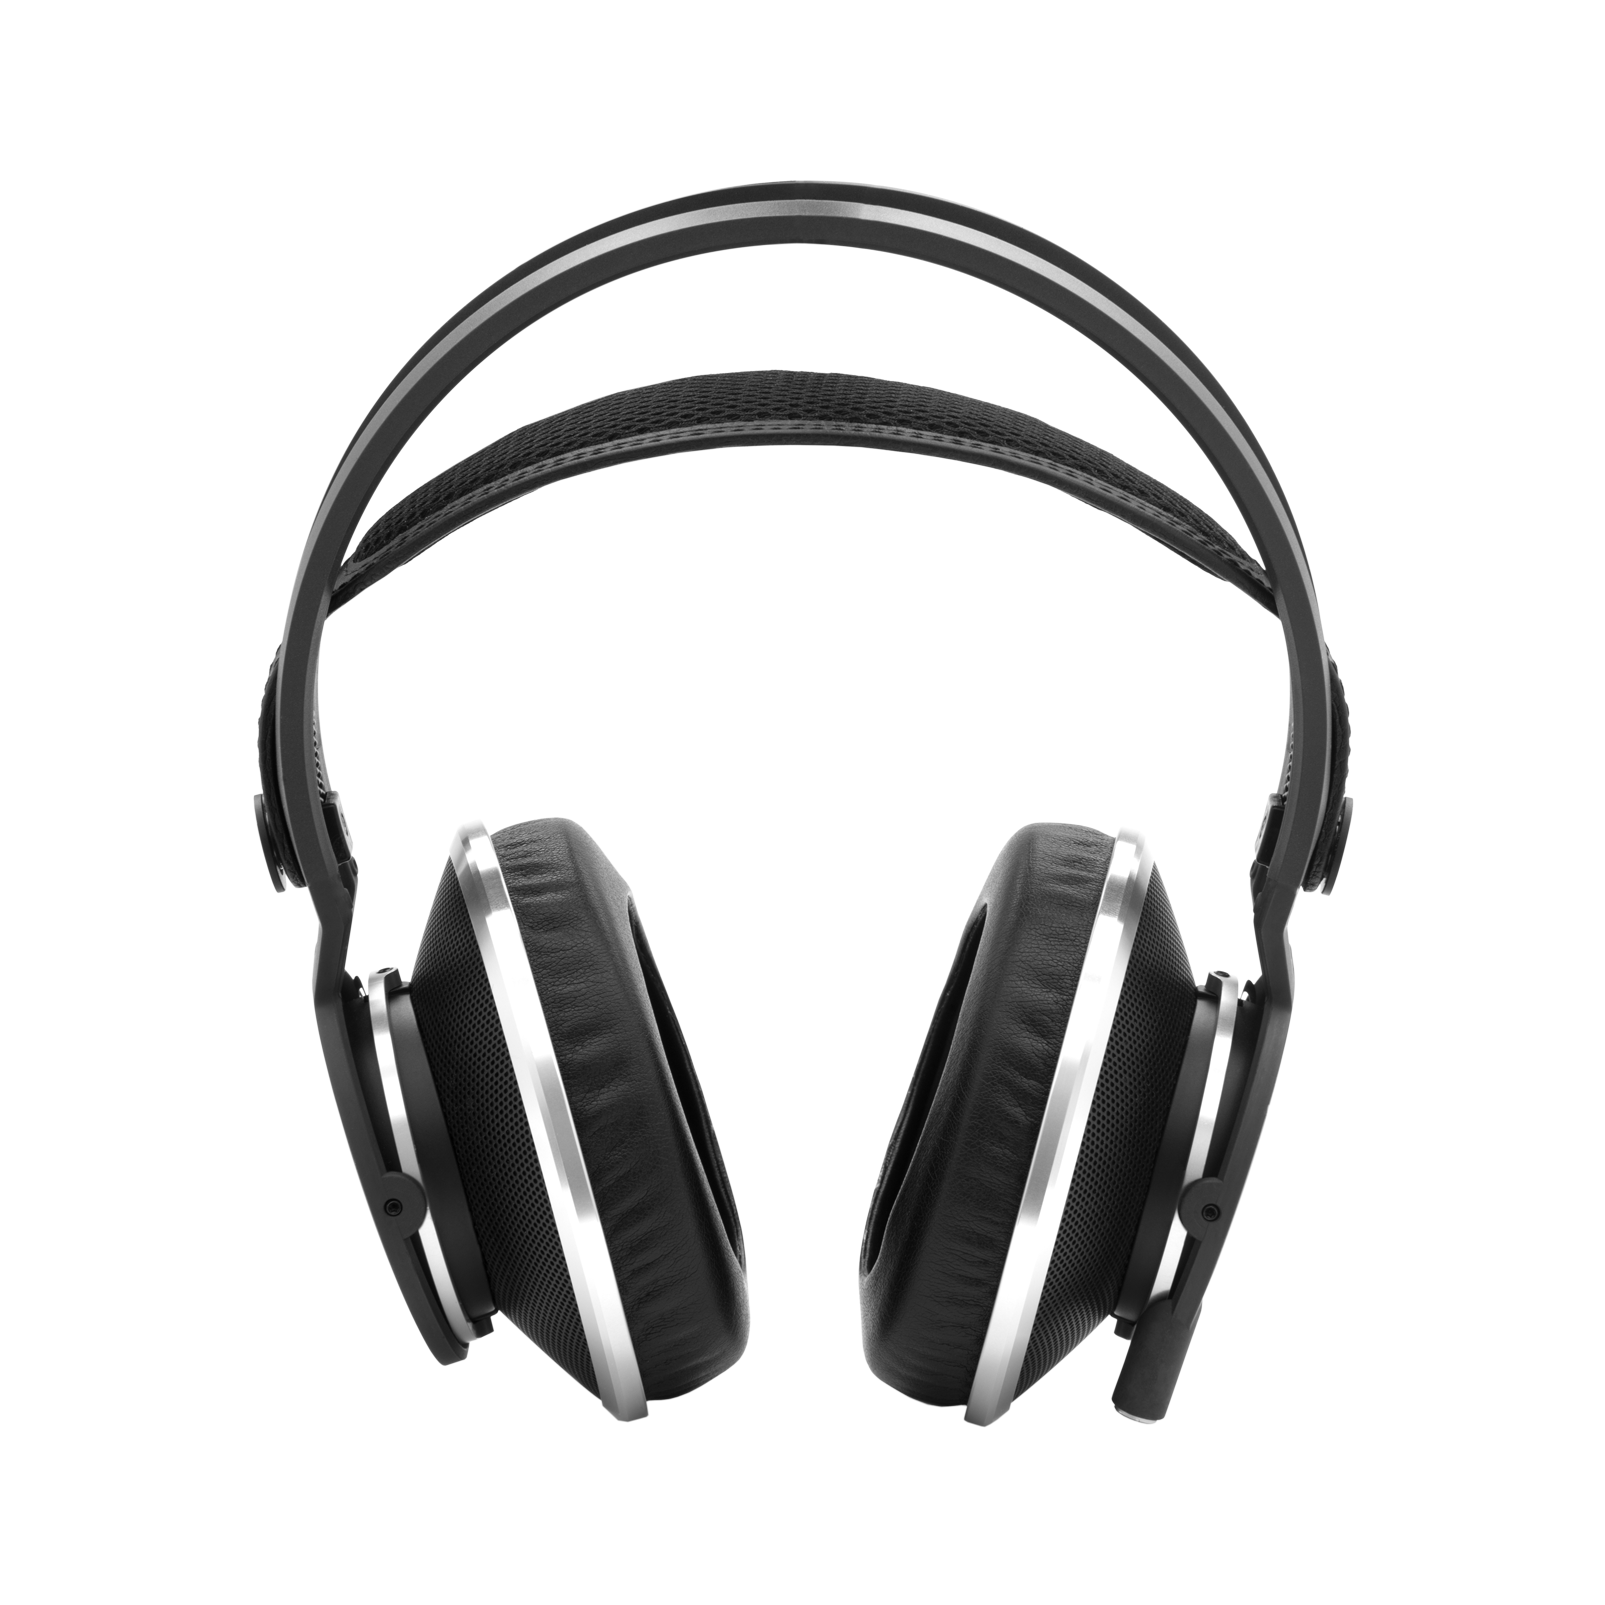 K812 | Superior reference headphones